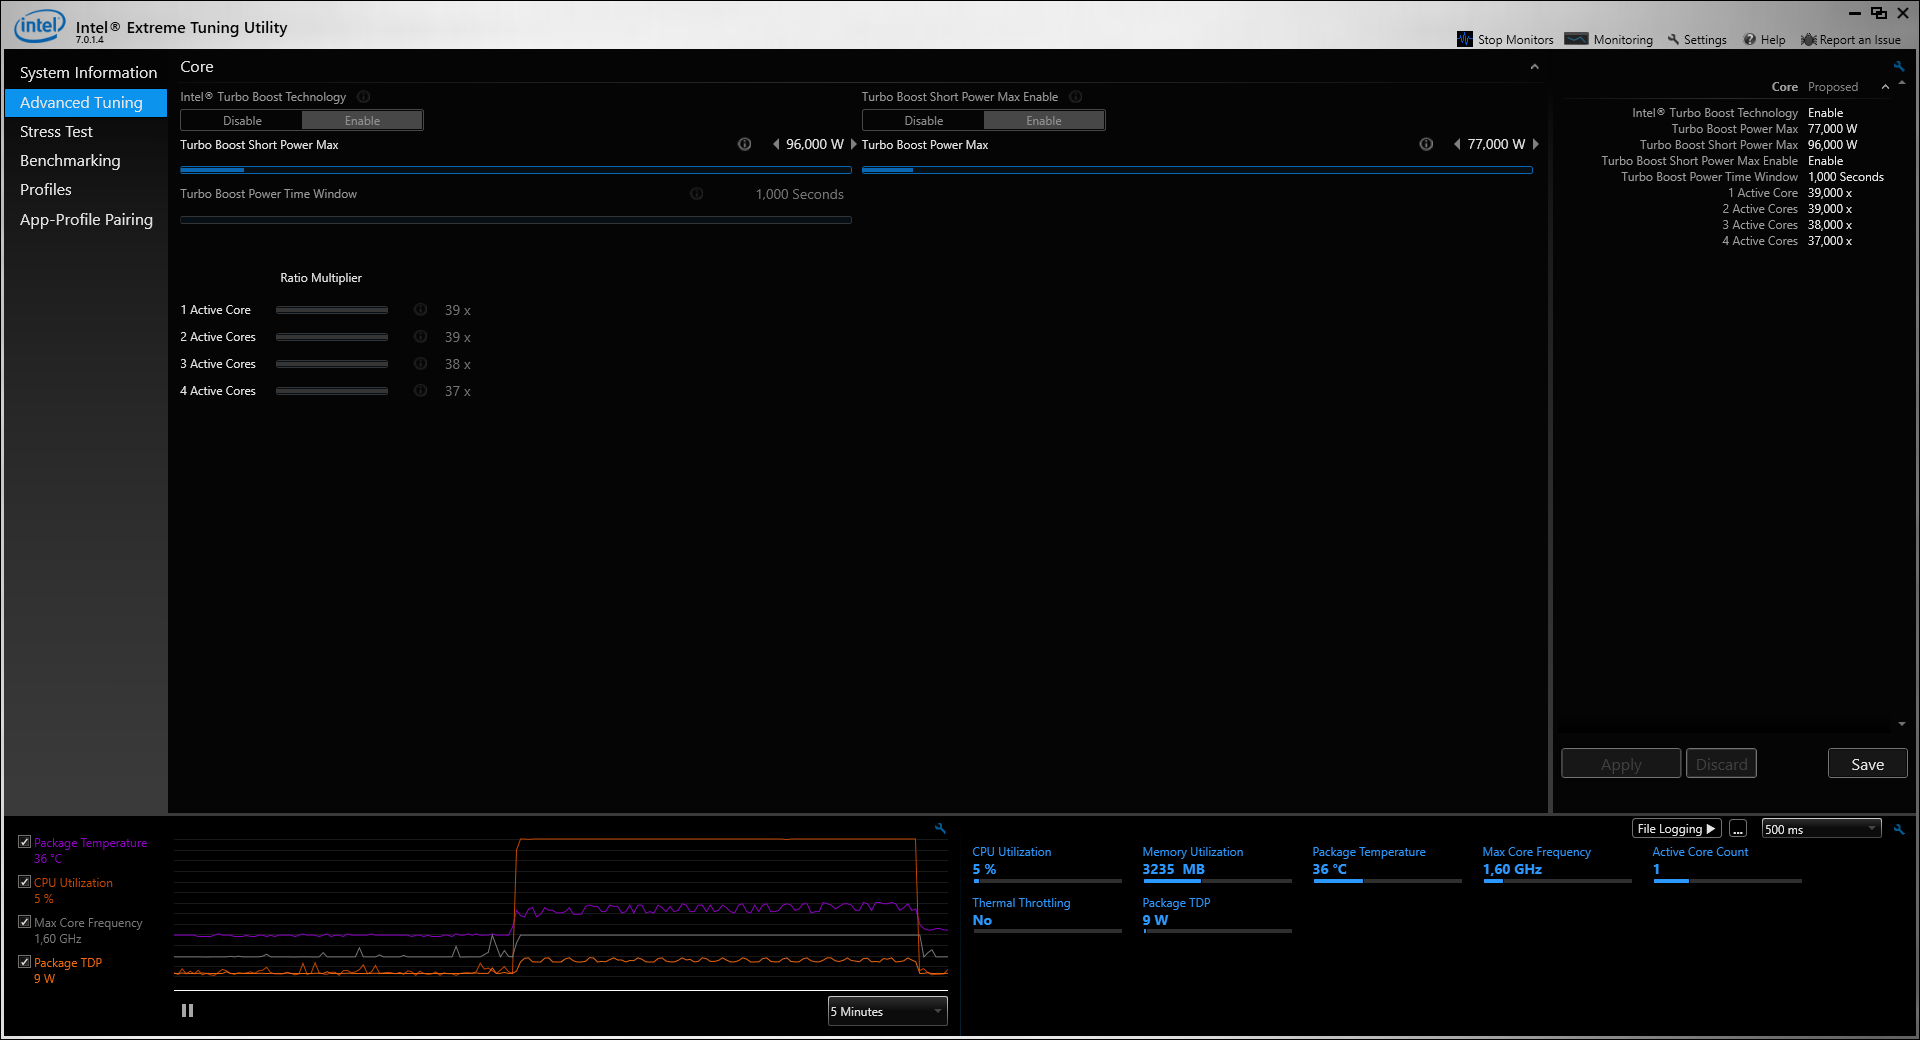 My Core i7 3770 Cpu can't Turbo Boost - Intel Community